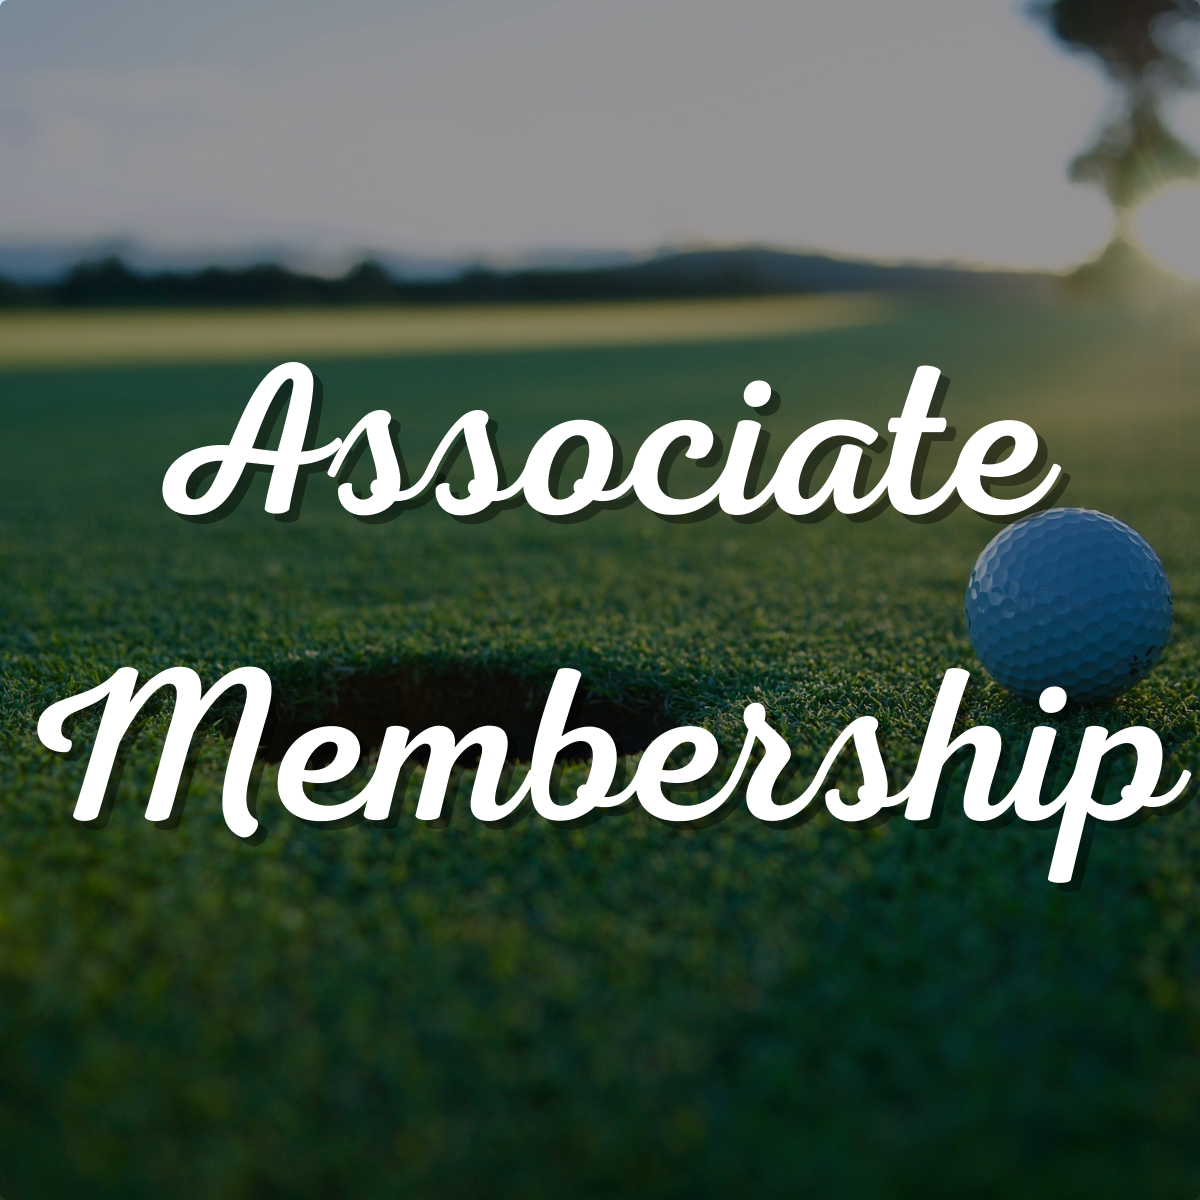 Associate Membership (tax included)